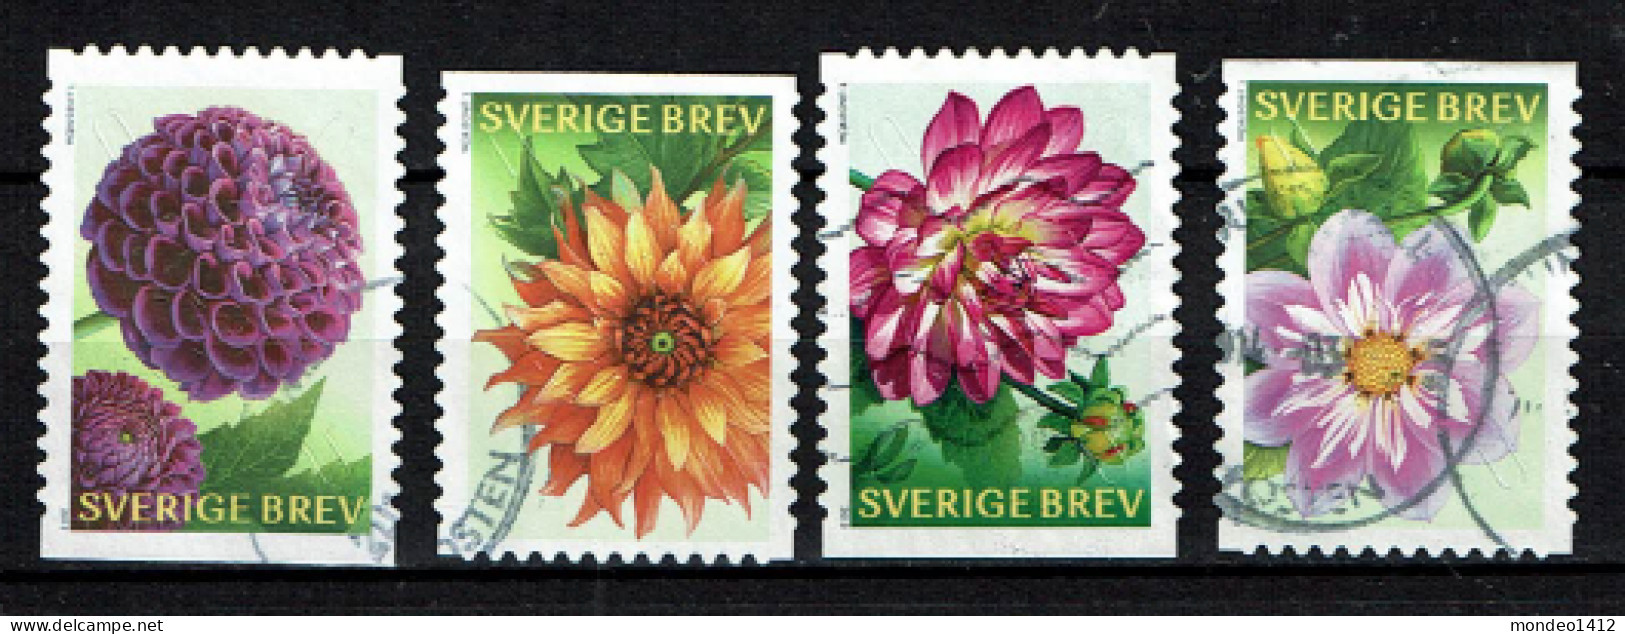 Sweden 2013 - Flora, Bloemen, Flowers, Fleurs, Dahlias - Used - Gebraucht